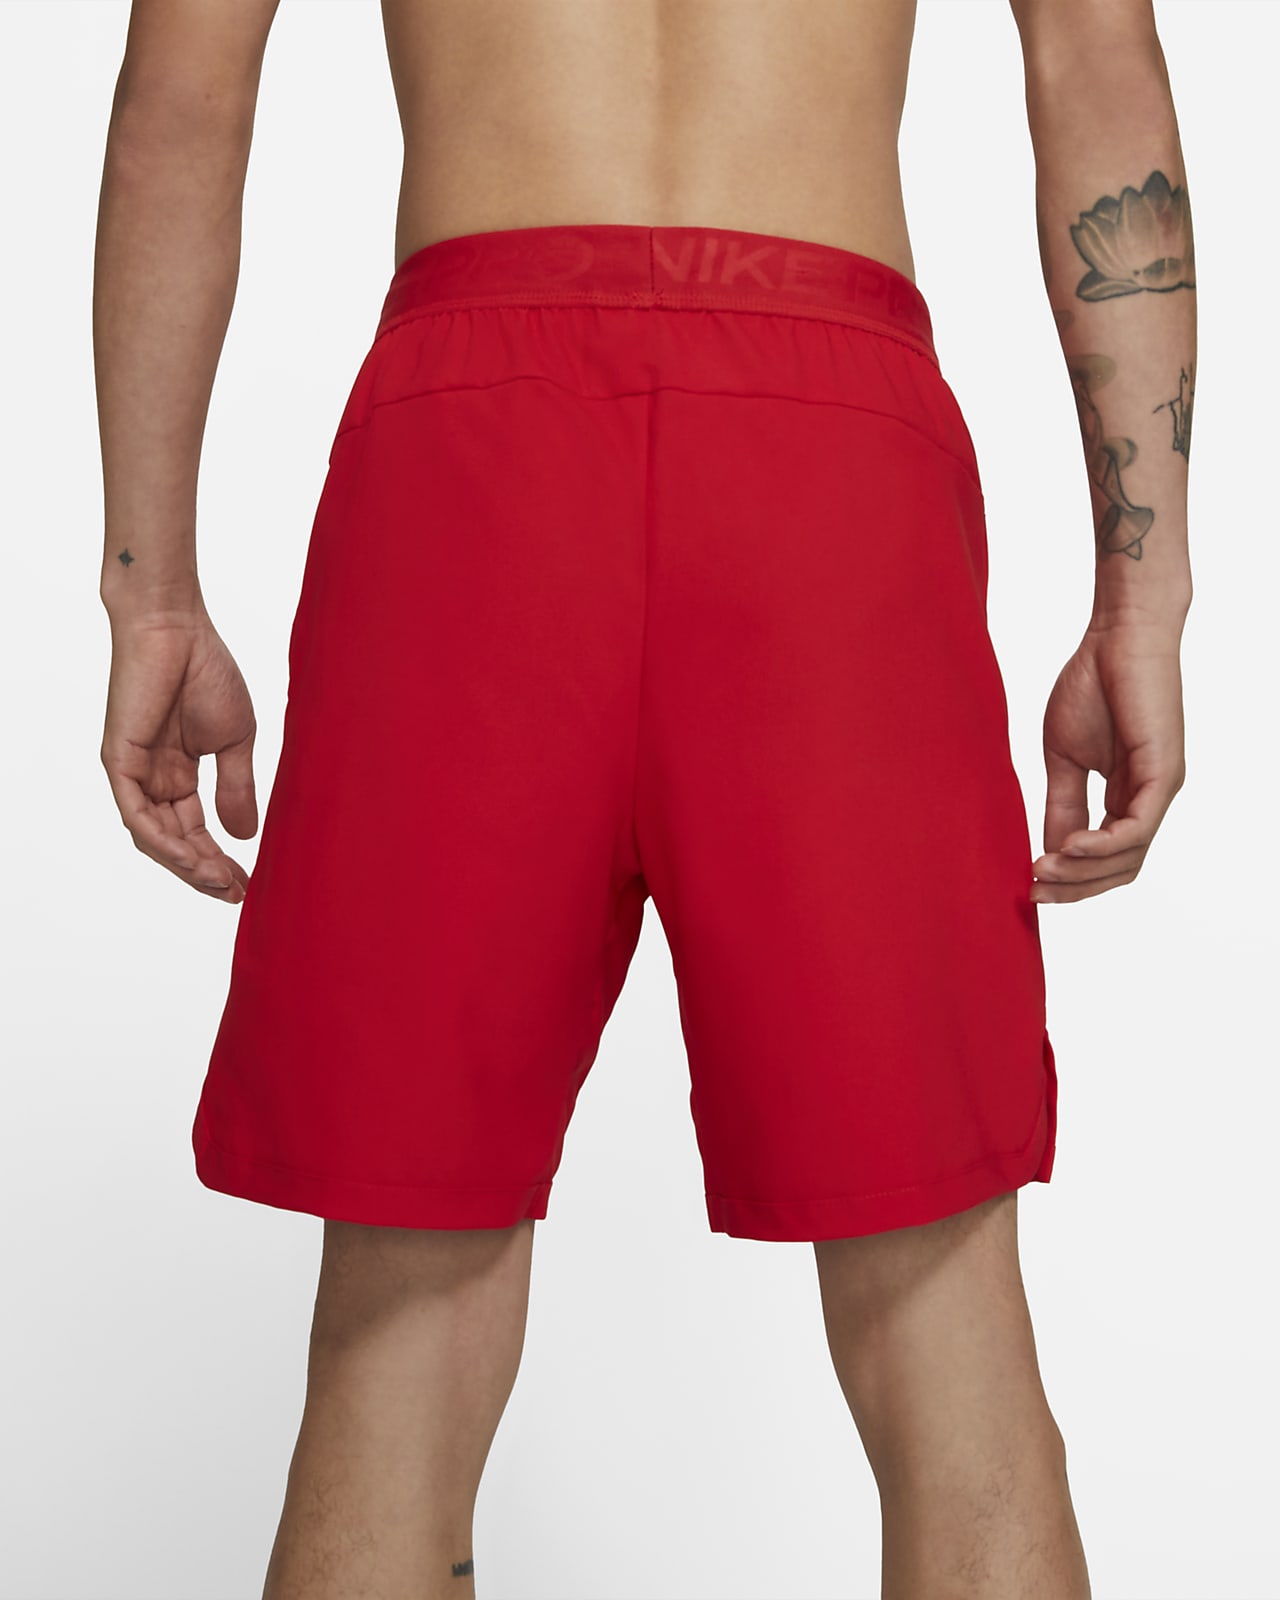 Nike Pro Flex Vent Max Men's Shorts 